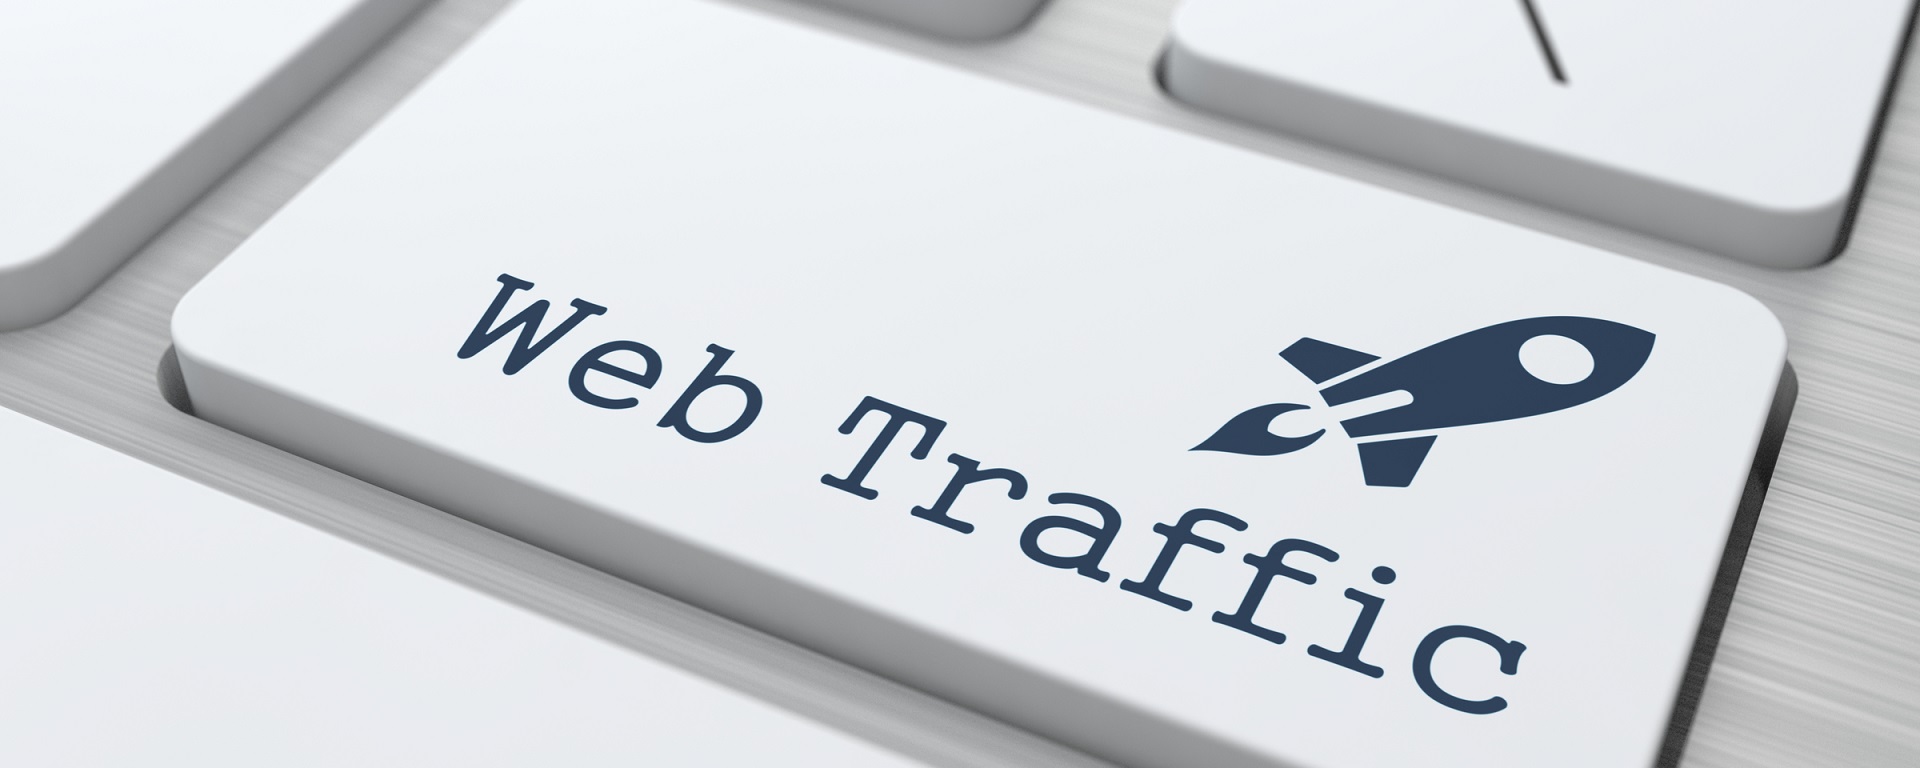 10 bí quyết tăng traffic cho website (P2)